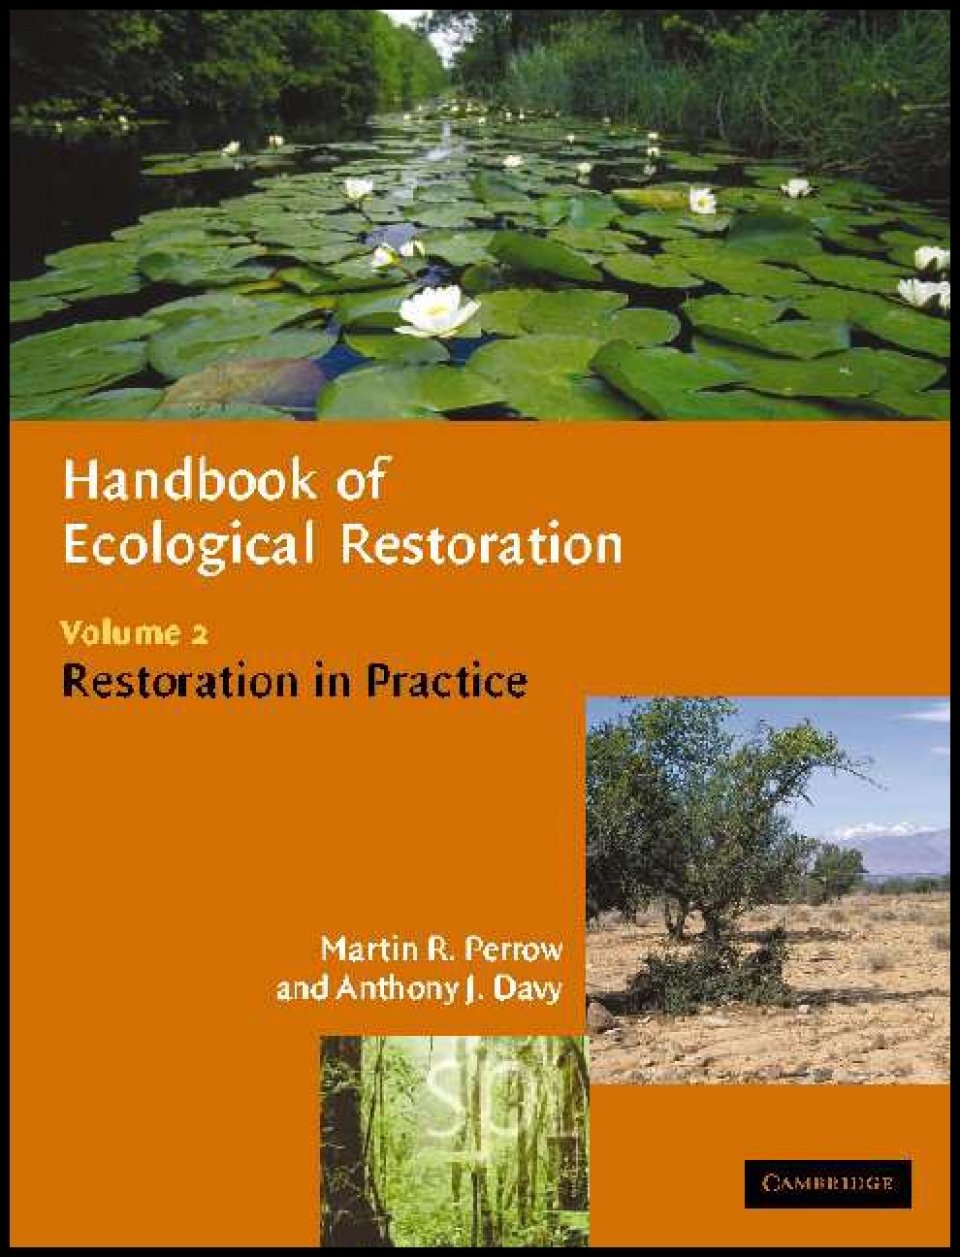 Handbook of Ecological Restoration Volume 2: Restoration in Practice